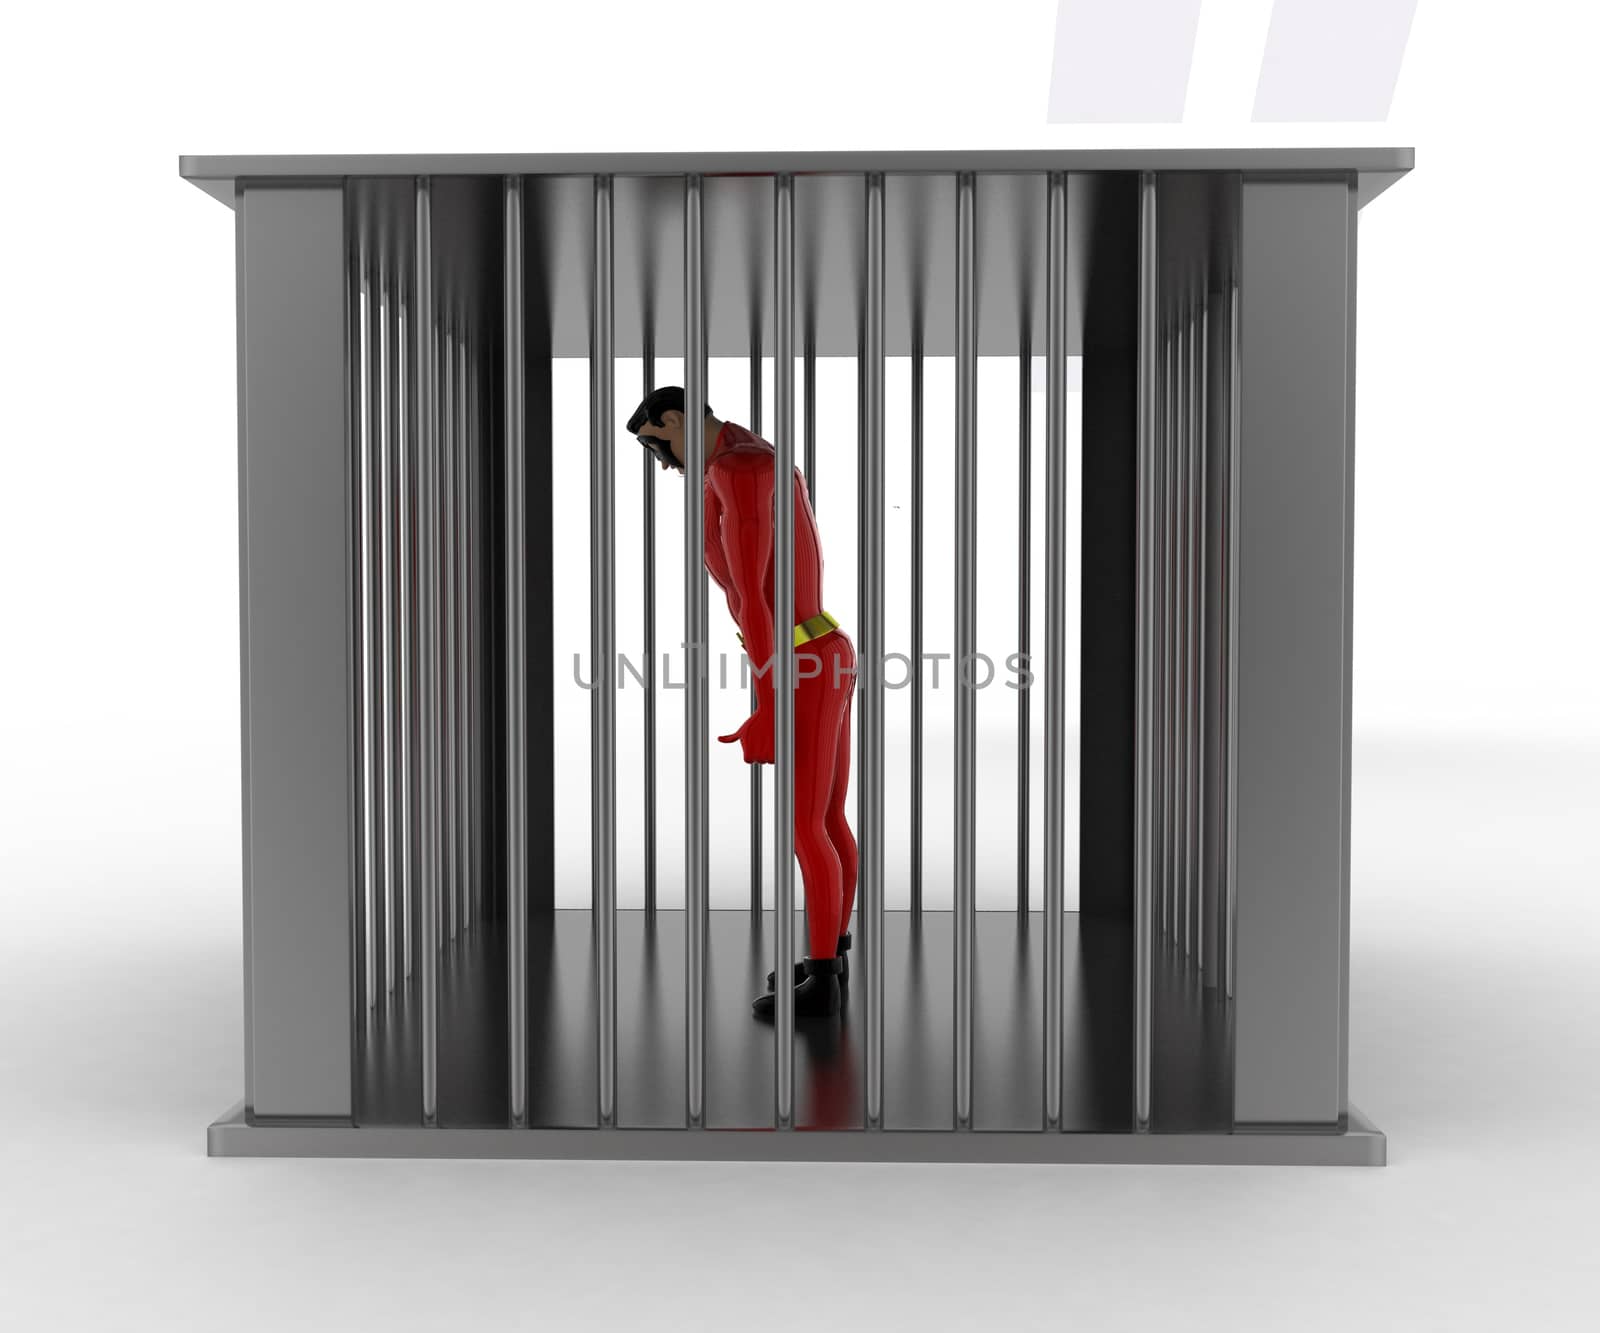 3d superhero into bar jail concept by touchmenithin@gmail.com